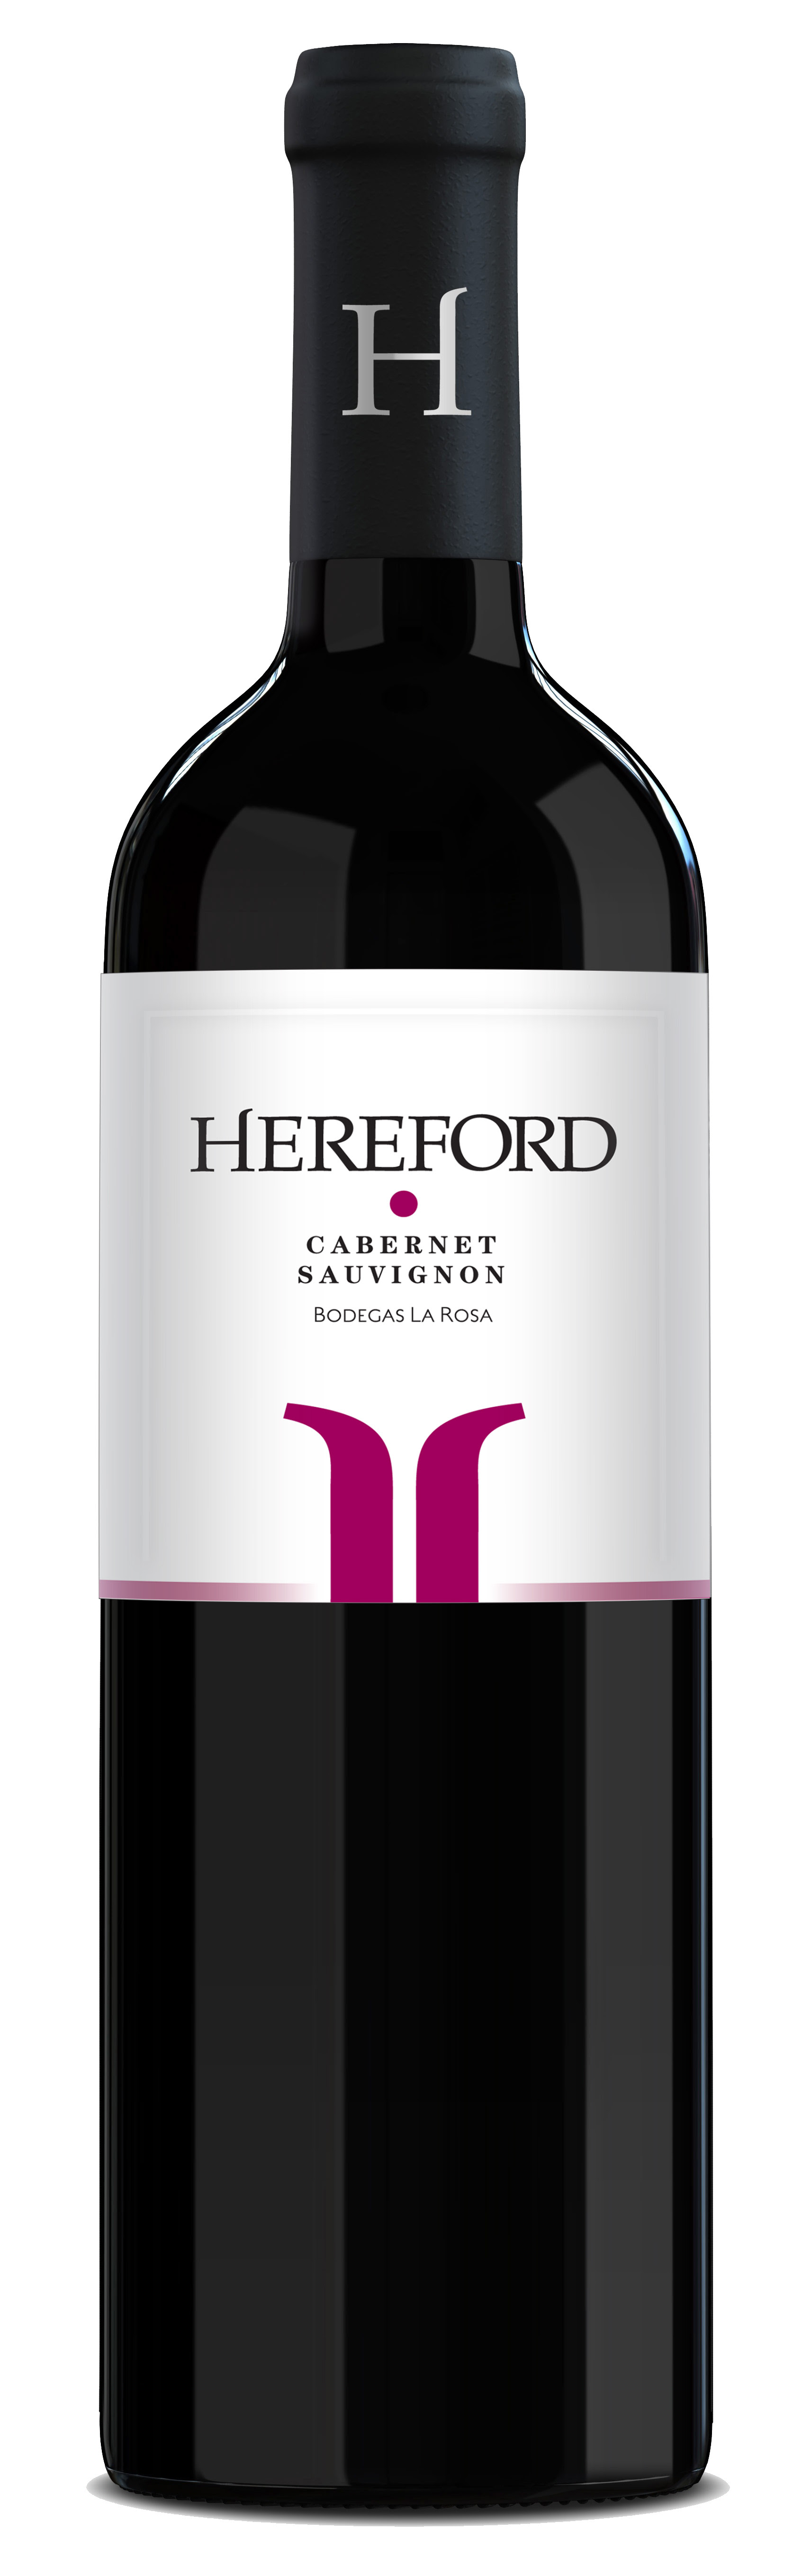 Vinos Hereford Cabernet Sauvignon